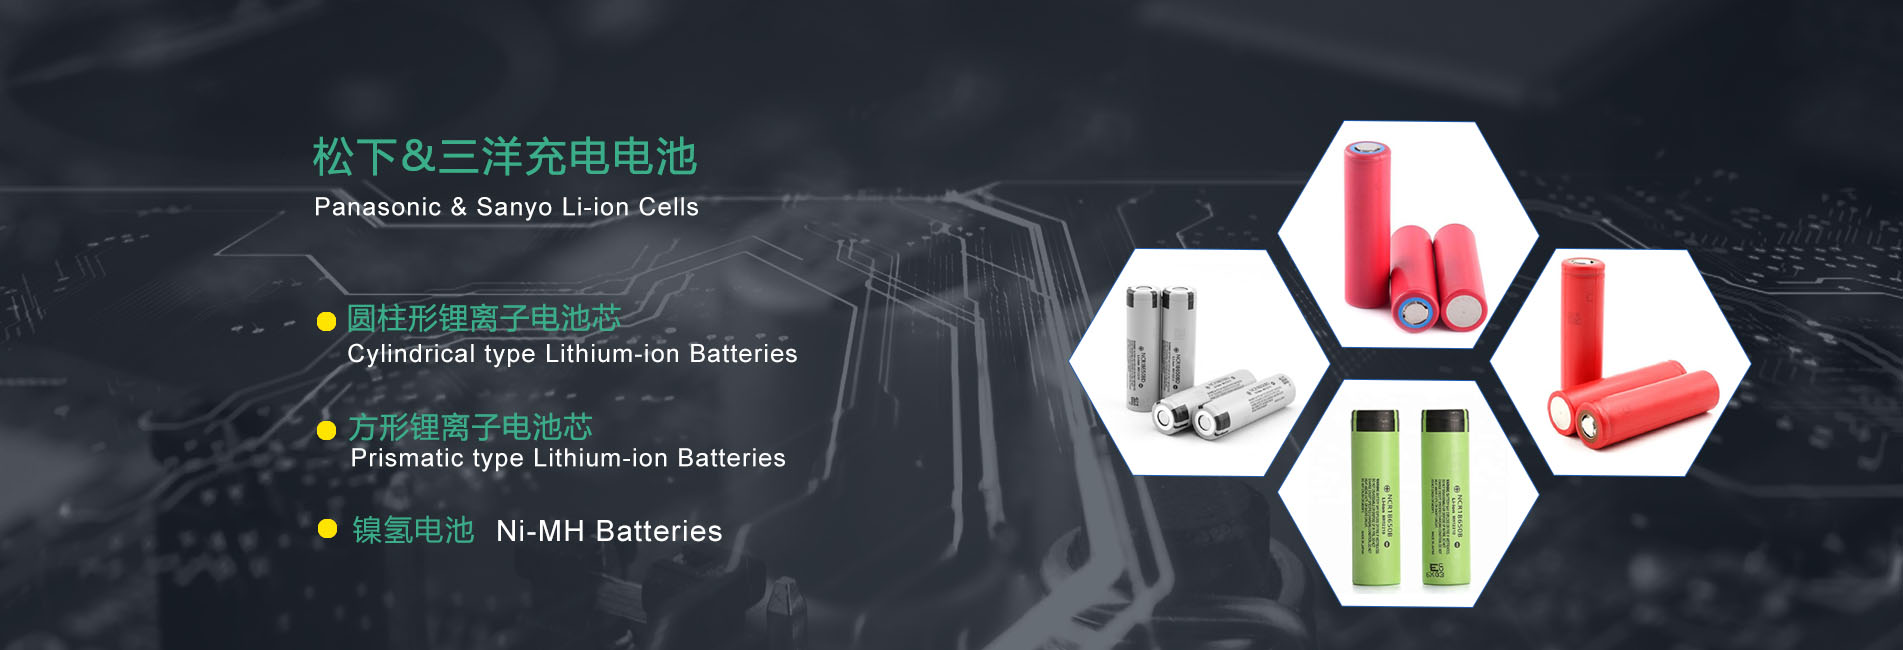 Panasonic Battery Cells